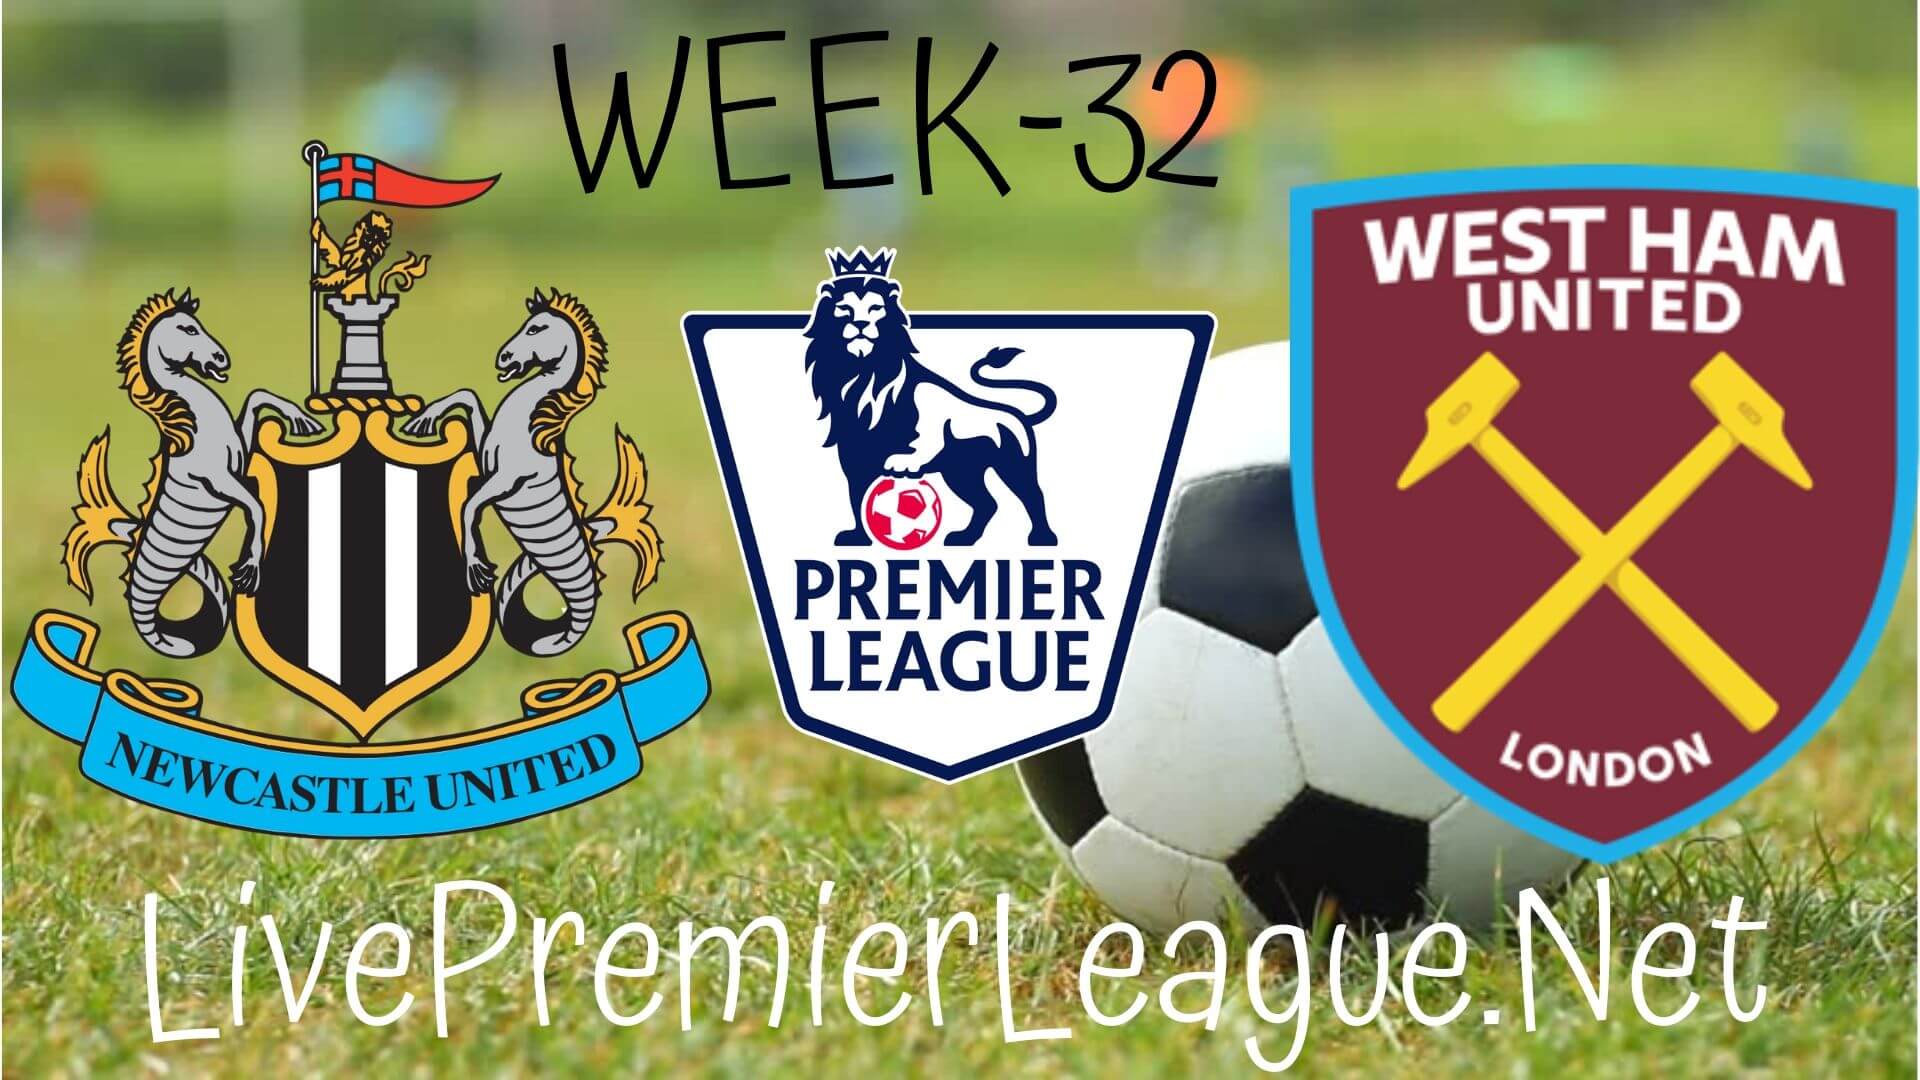  Newcastle United vs West Ham United  Live Stream | EPL Week 32